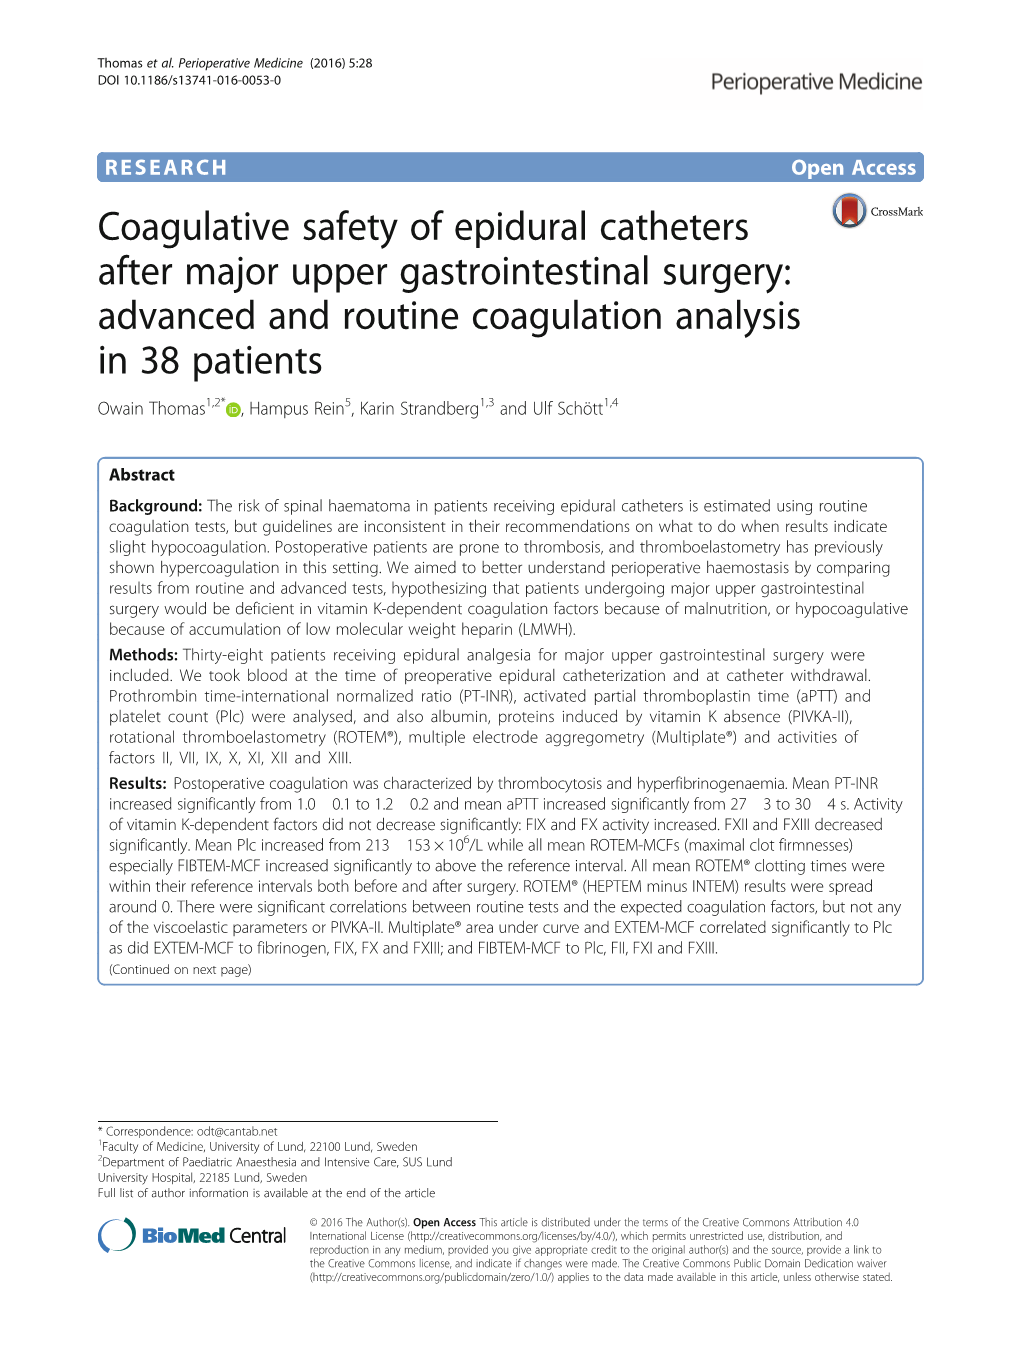 Coagulative Safety of Epidural Catheters After Major Upper Gastrointestinal Surgery: Advanced and Routine Coagulation Analysis I